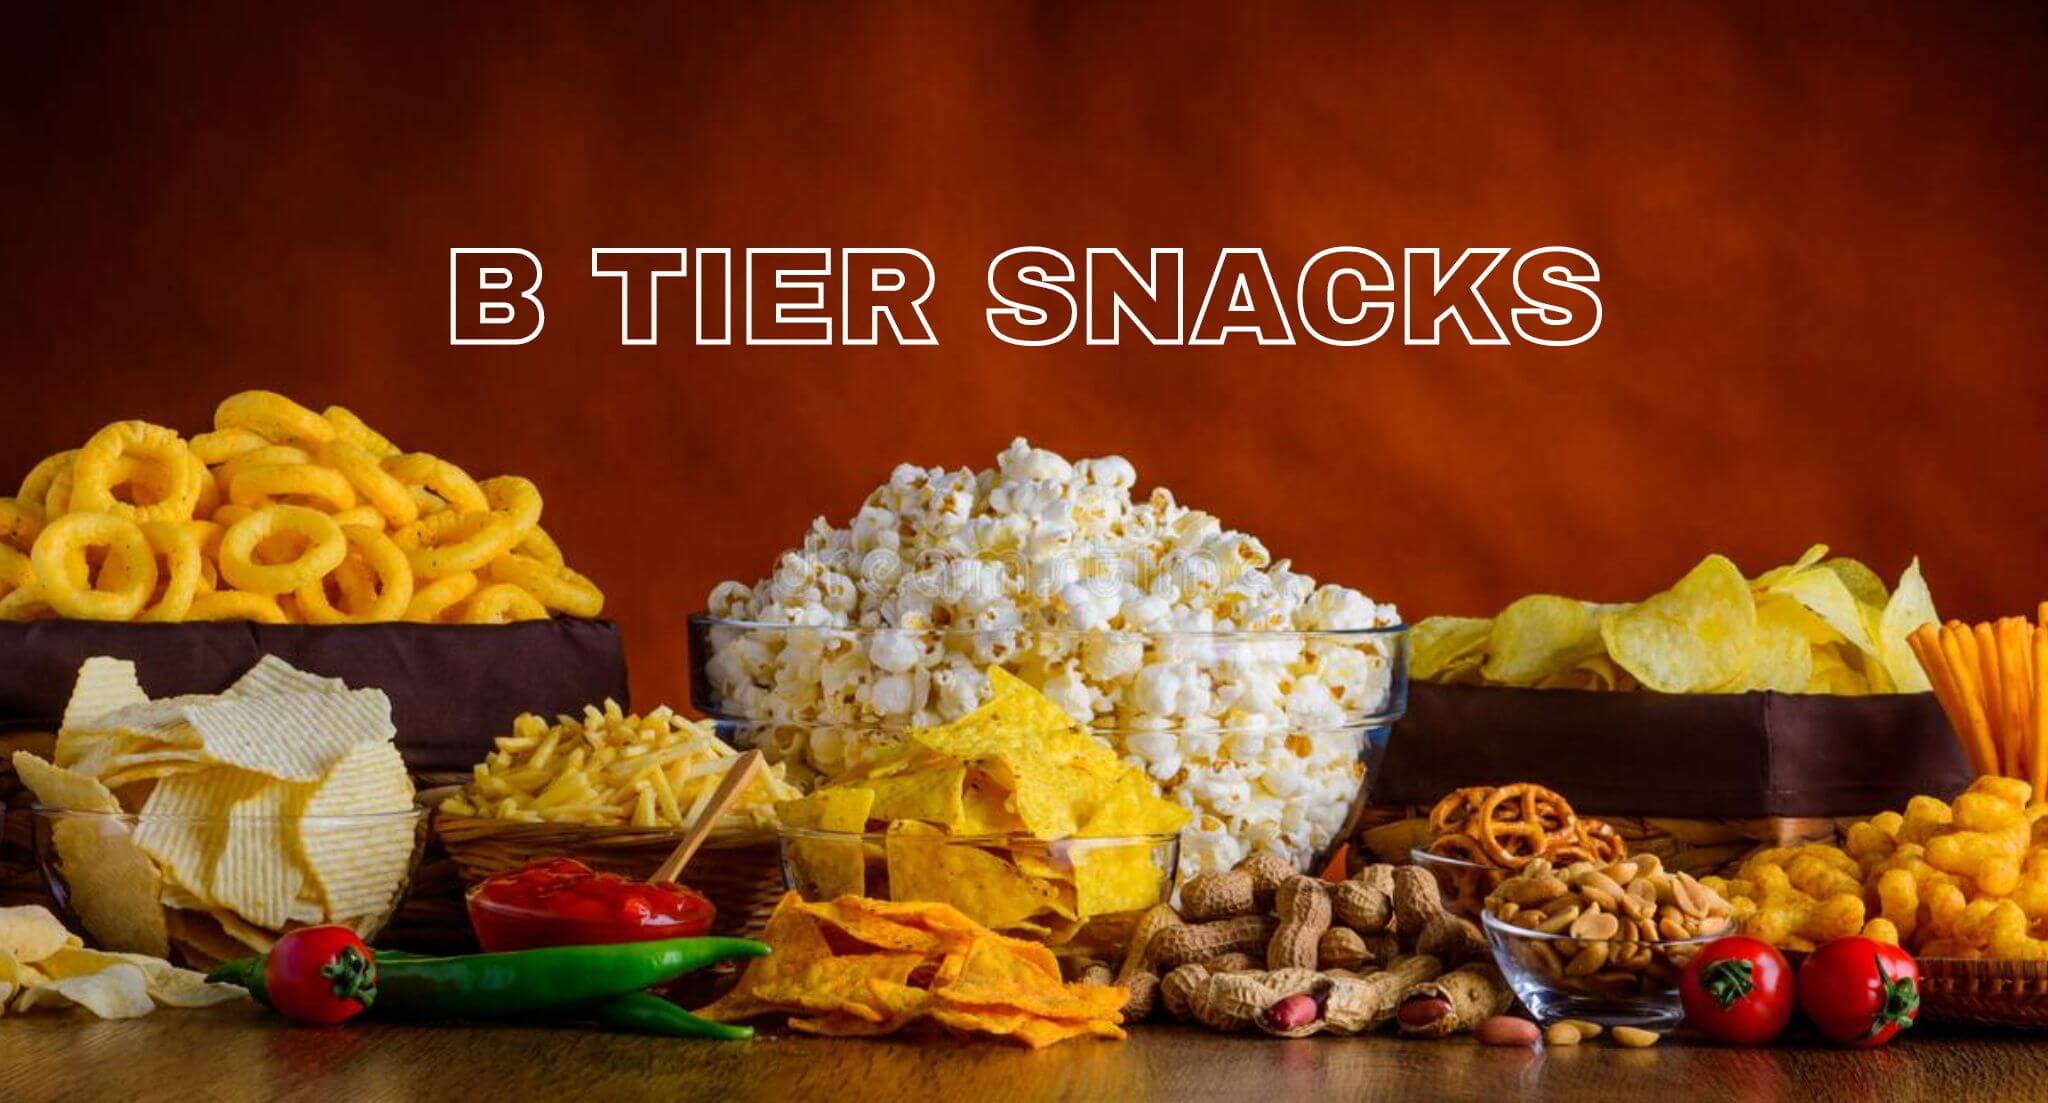 B-tier of snacks